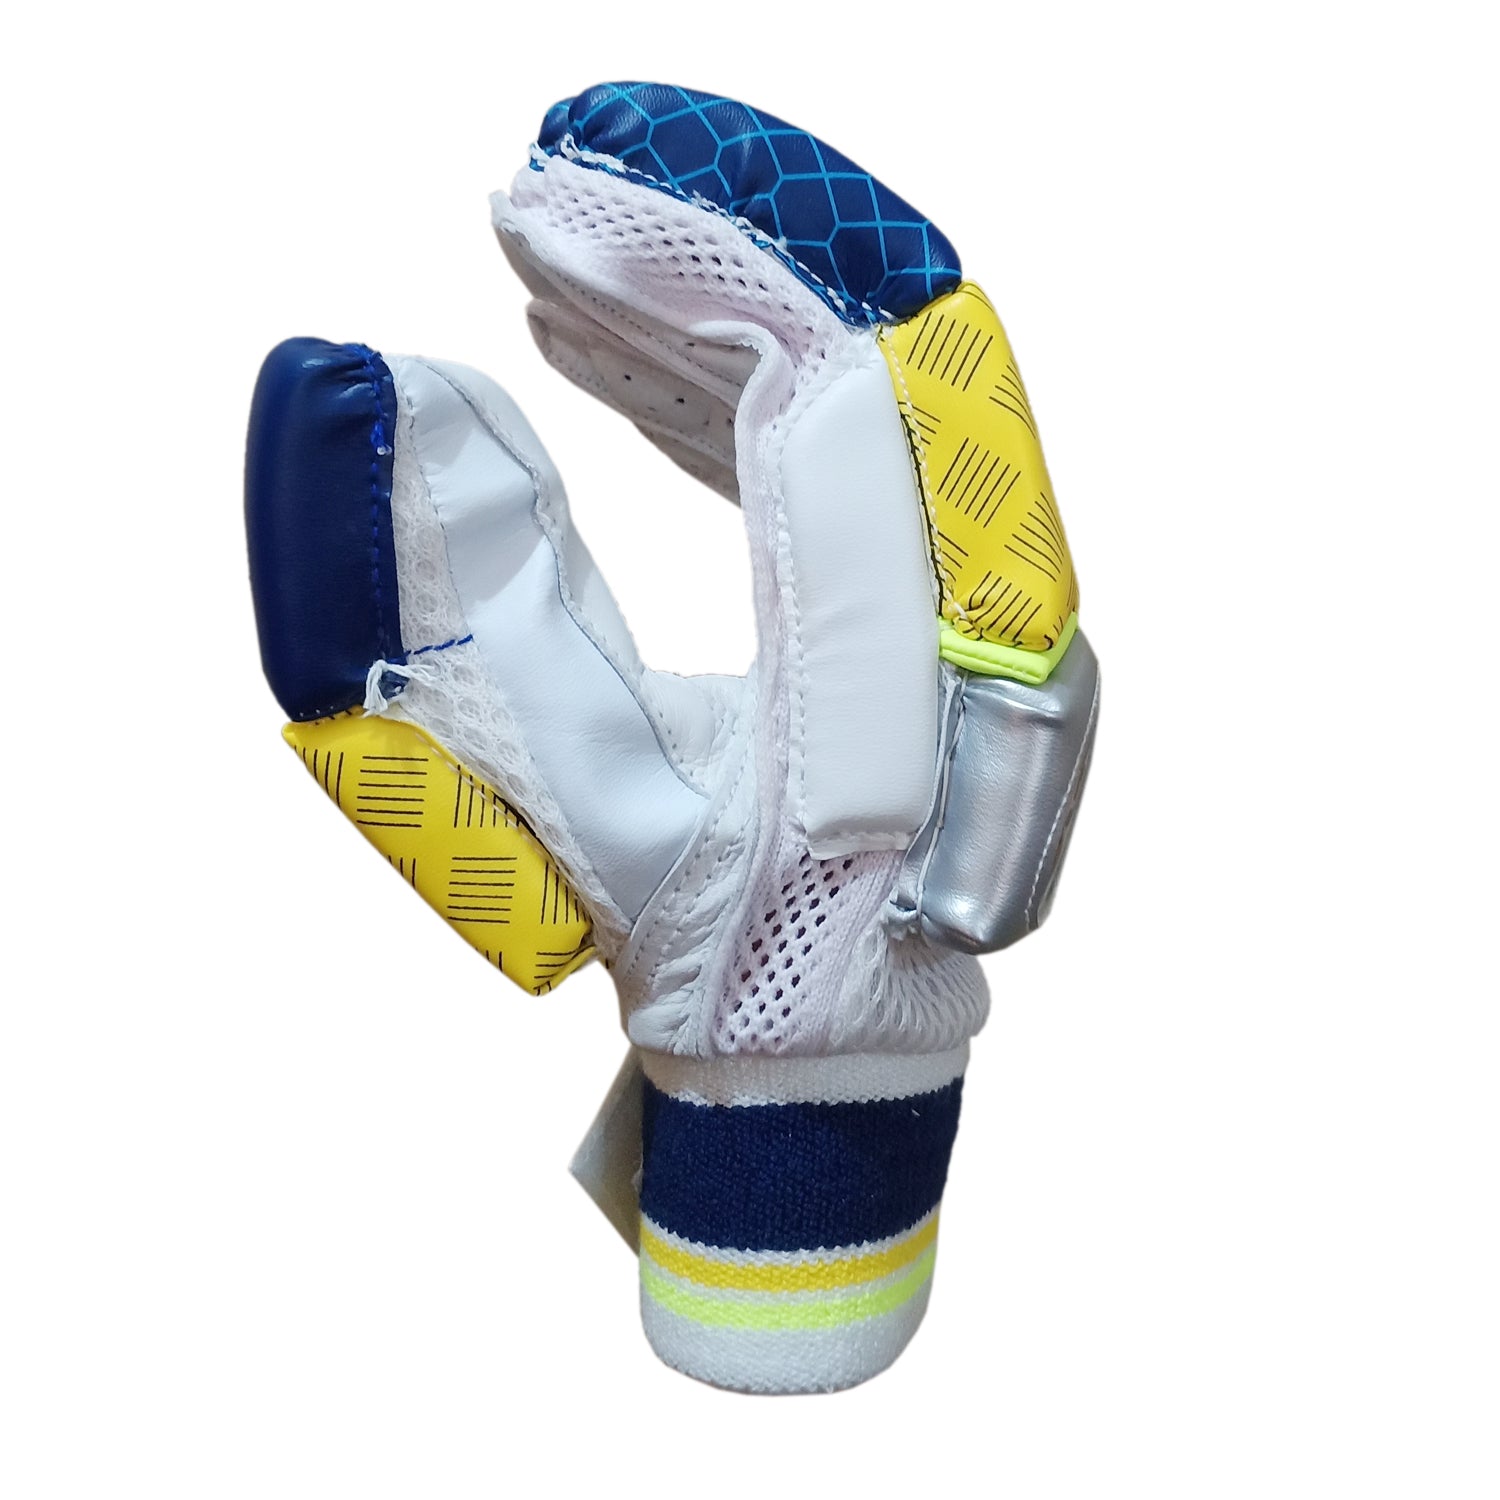 SG Sierra Spark Batting Gloves - Right Hand - Best Price online Prokicksports.com